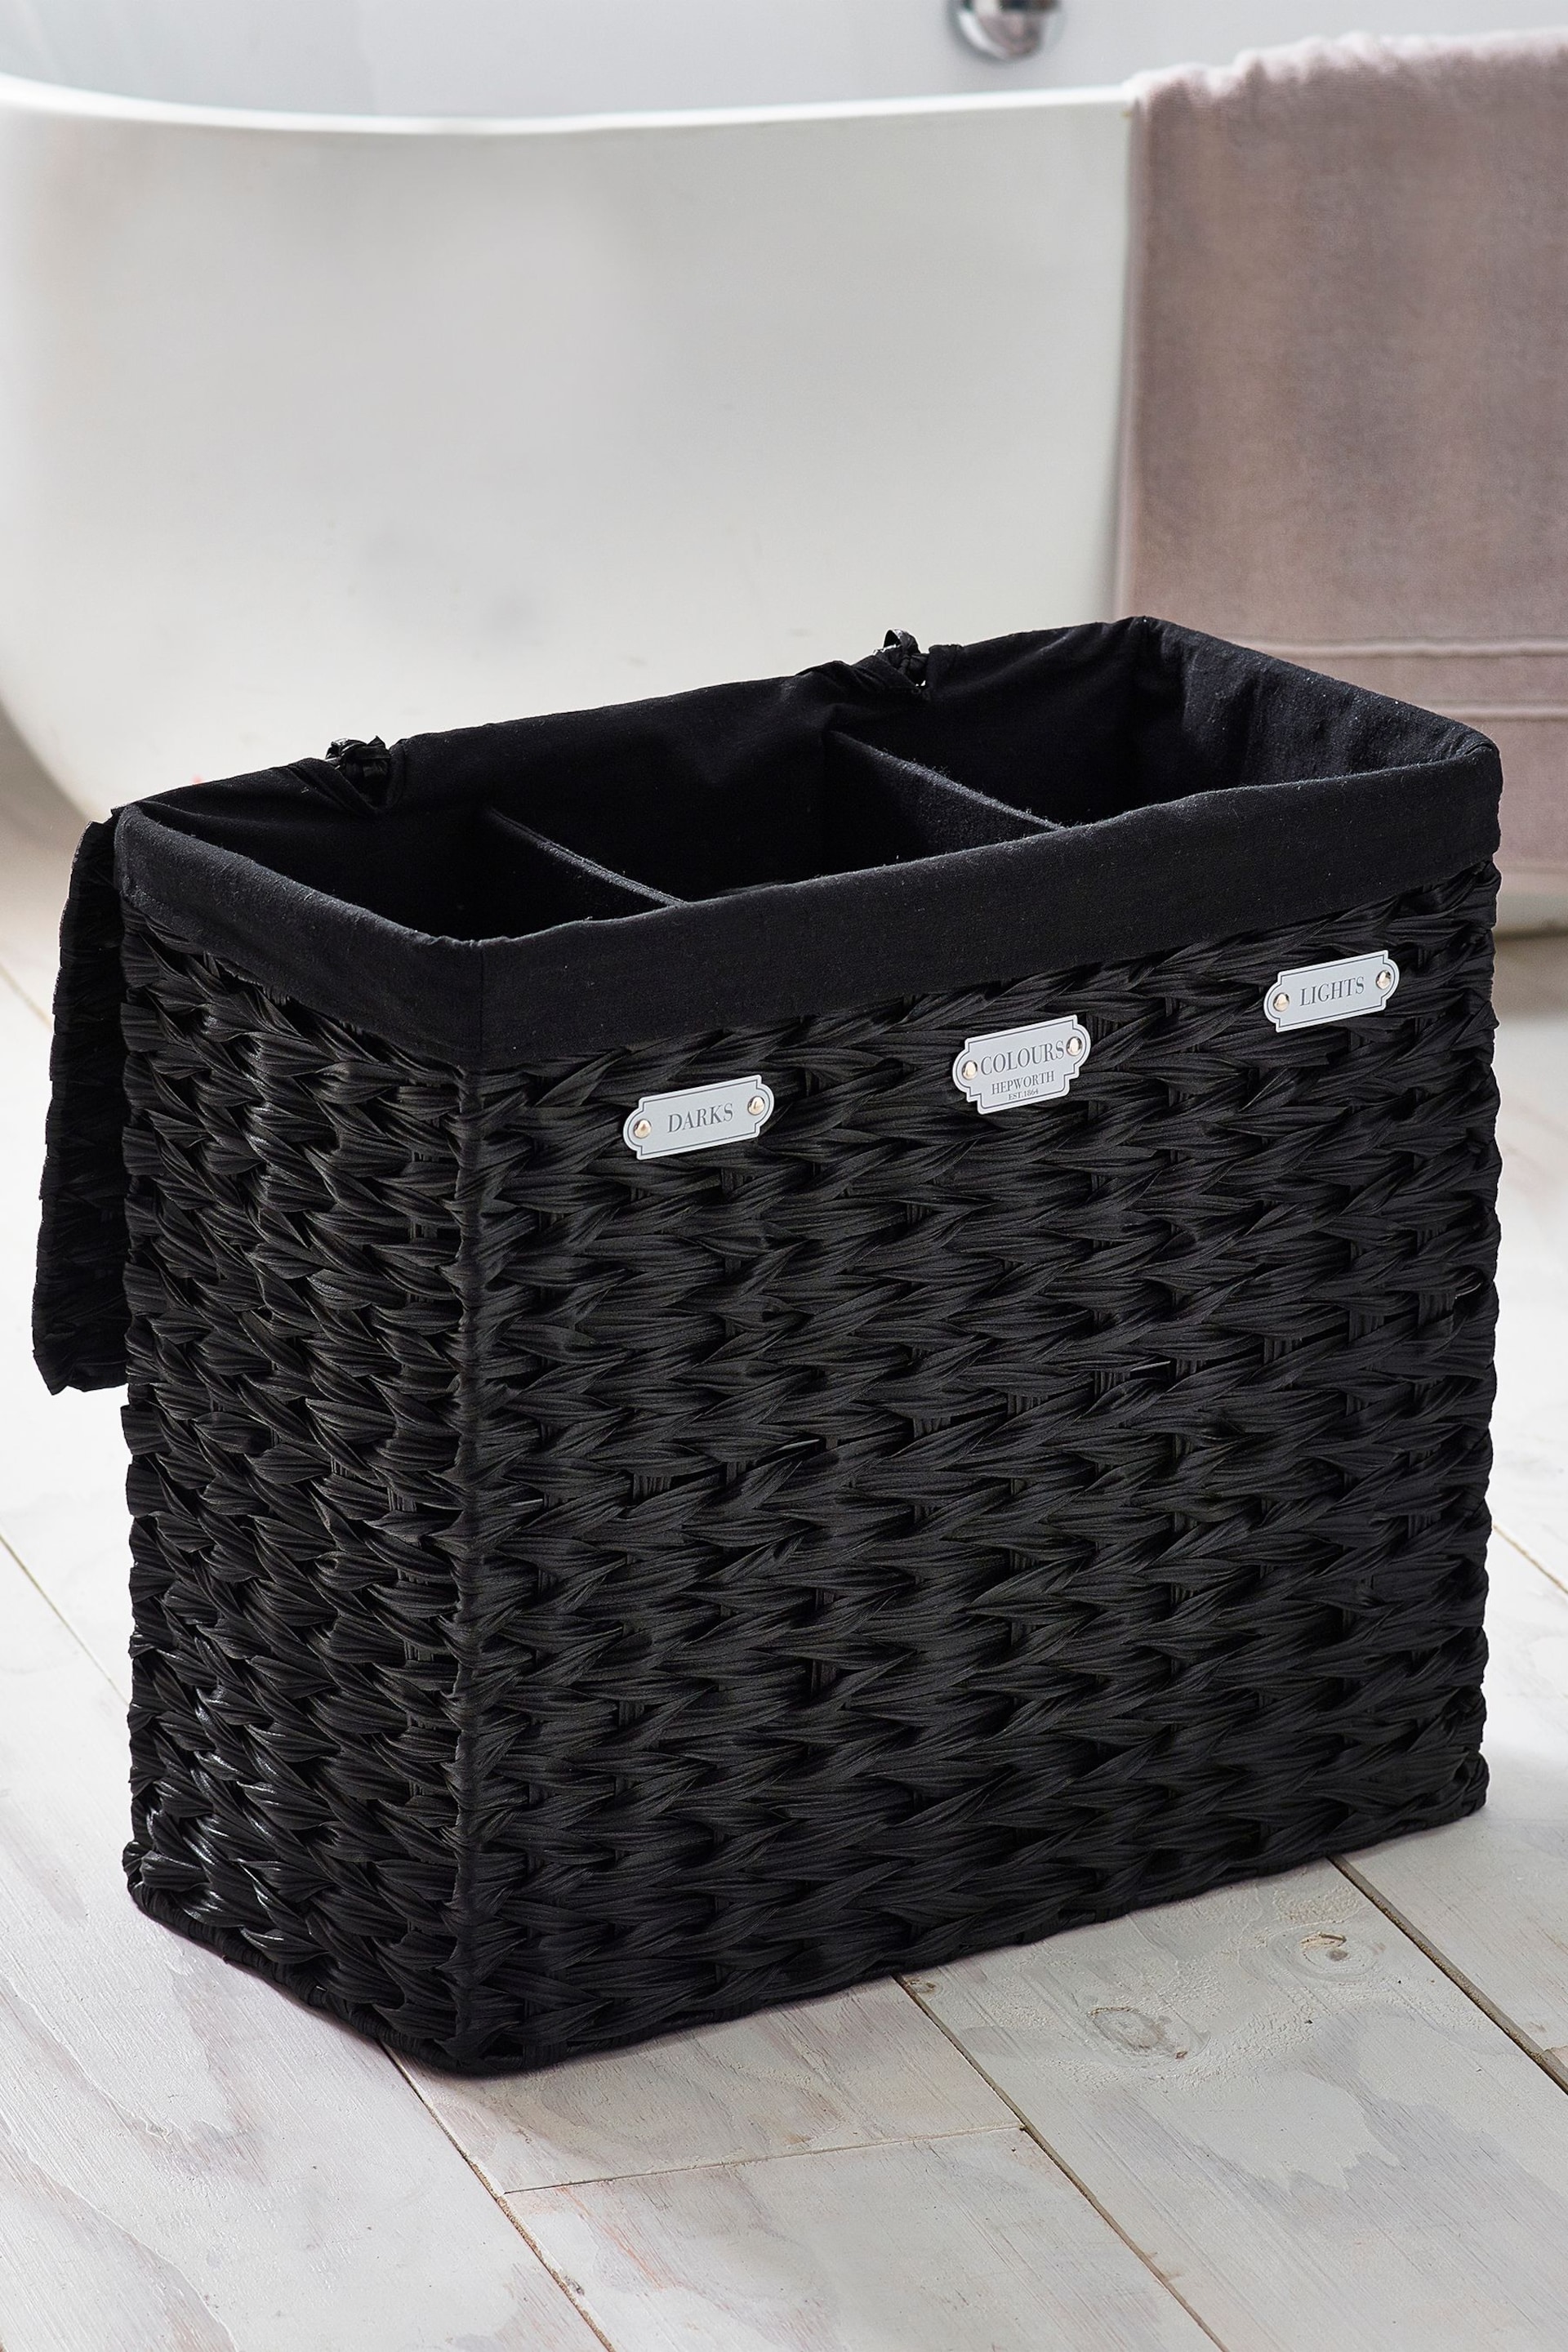 Black Hepworth Wicker Sorter Laundry Hamper - Image 3 of 7